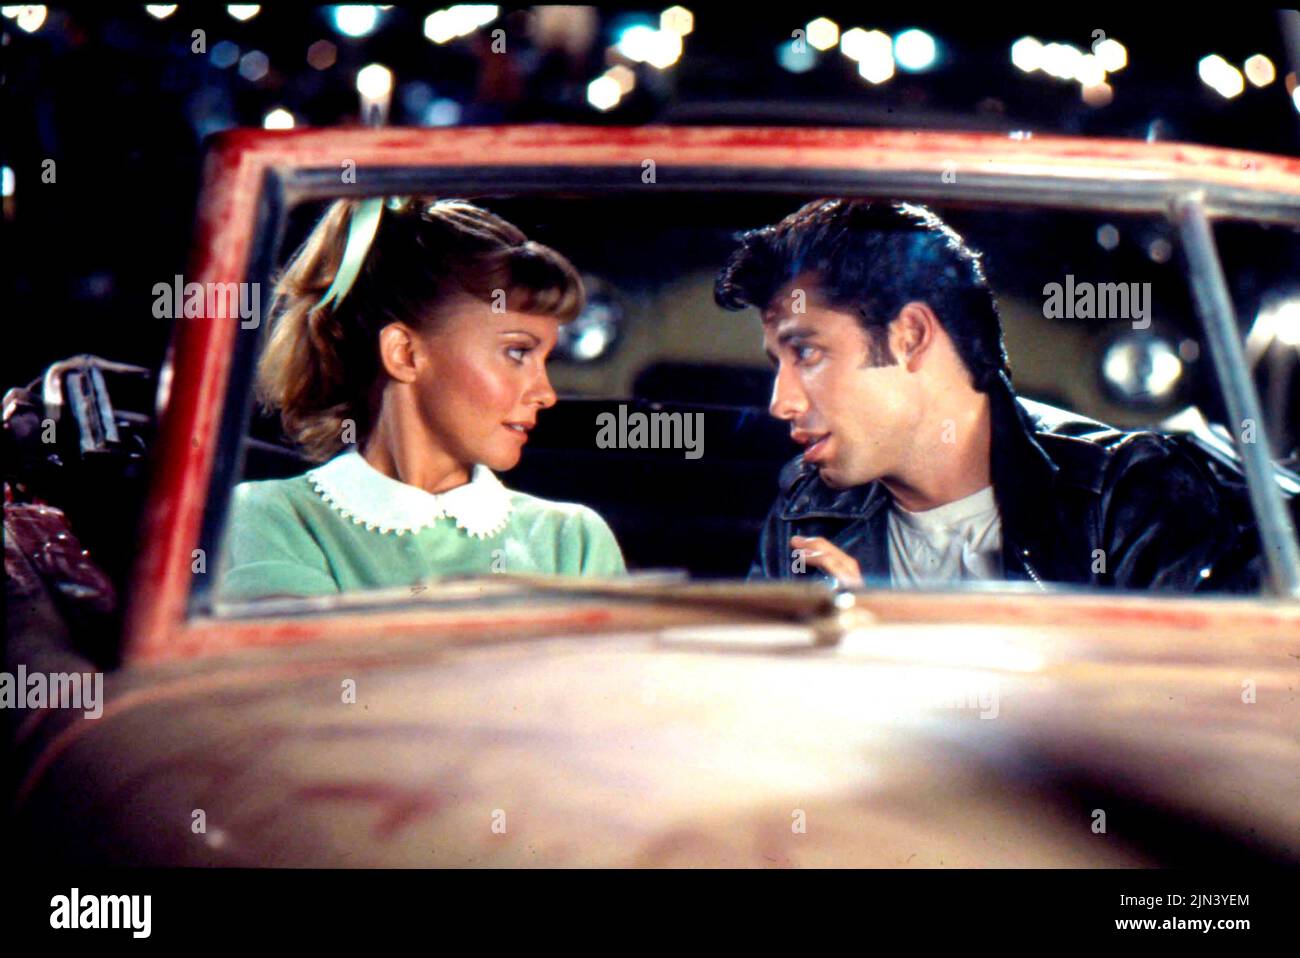 1977, Hollywood, California, USA: Attori OLIVIA NEWTON-JOHN come Sandy e JOHN TRAVOLTA come Danny nel film "Grease". (Credit Image: © Paramount/Entertainment Pictures) Foto Stock